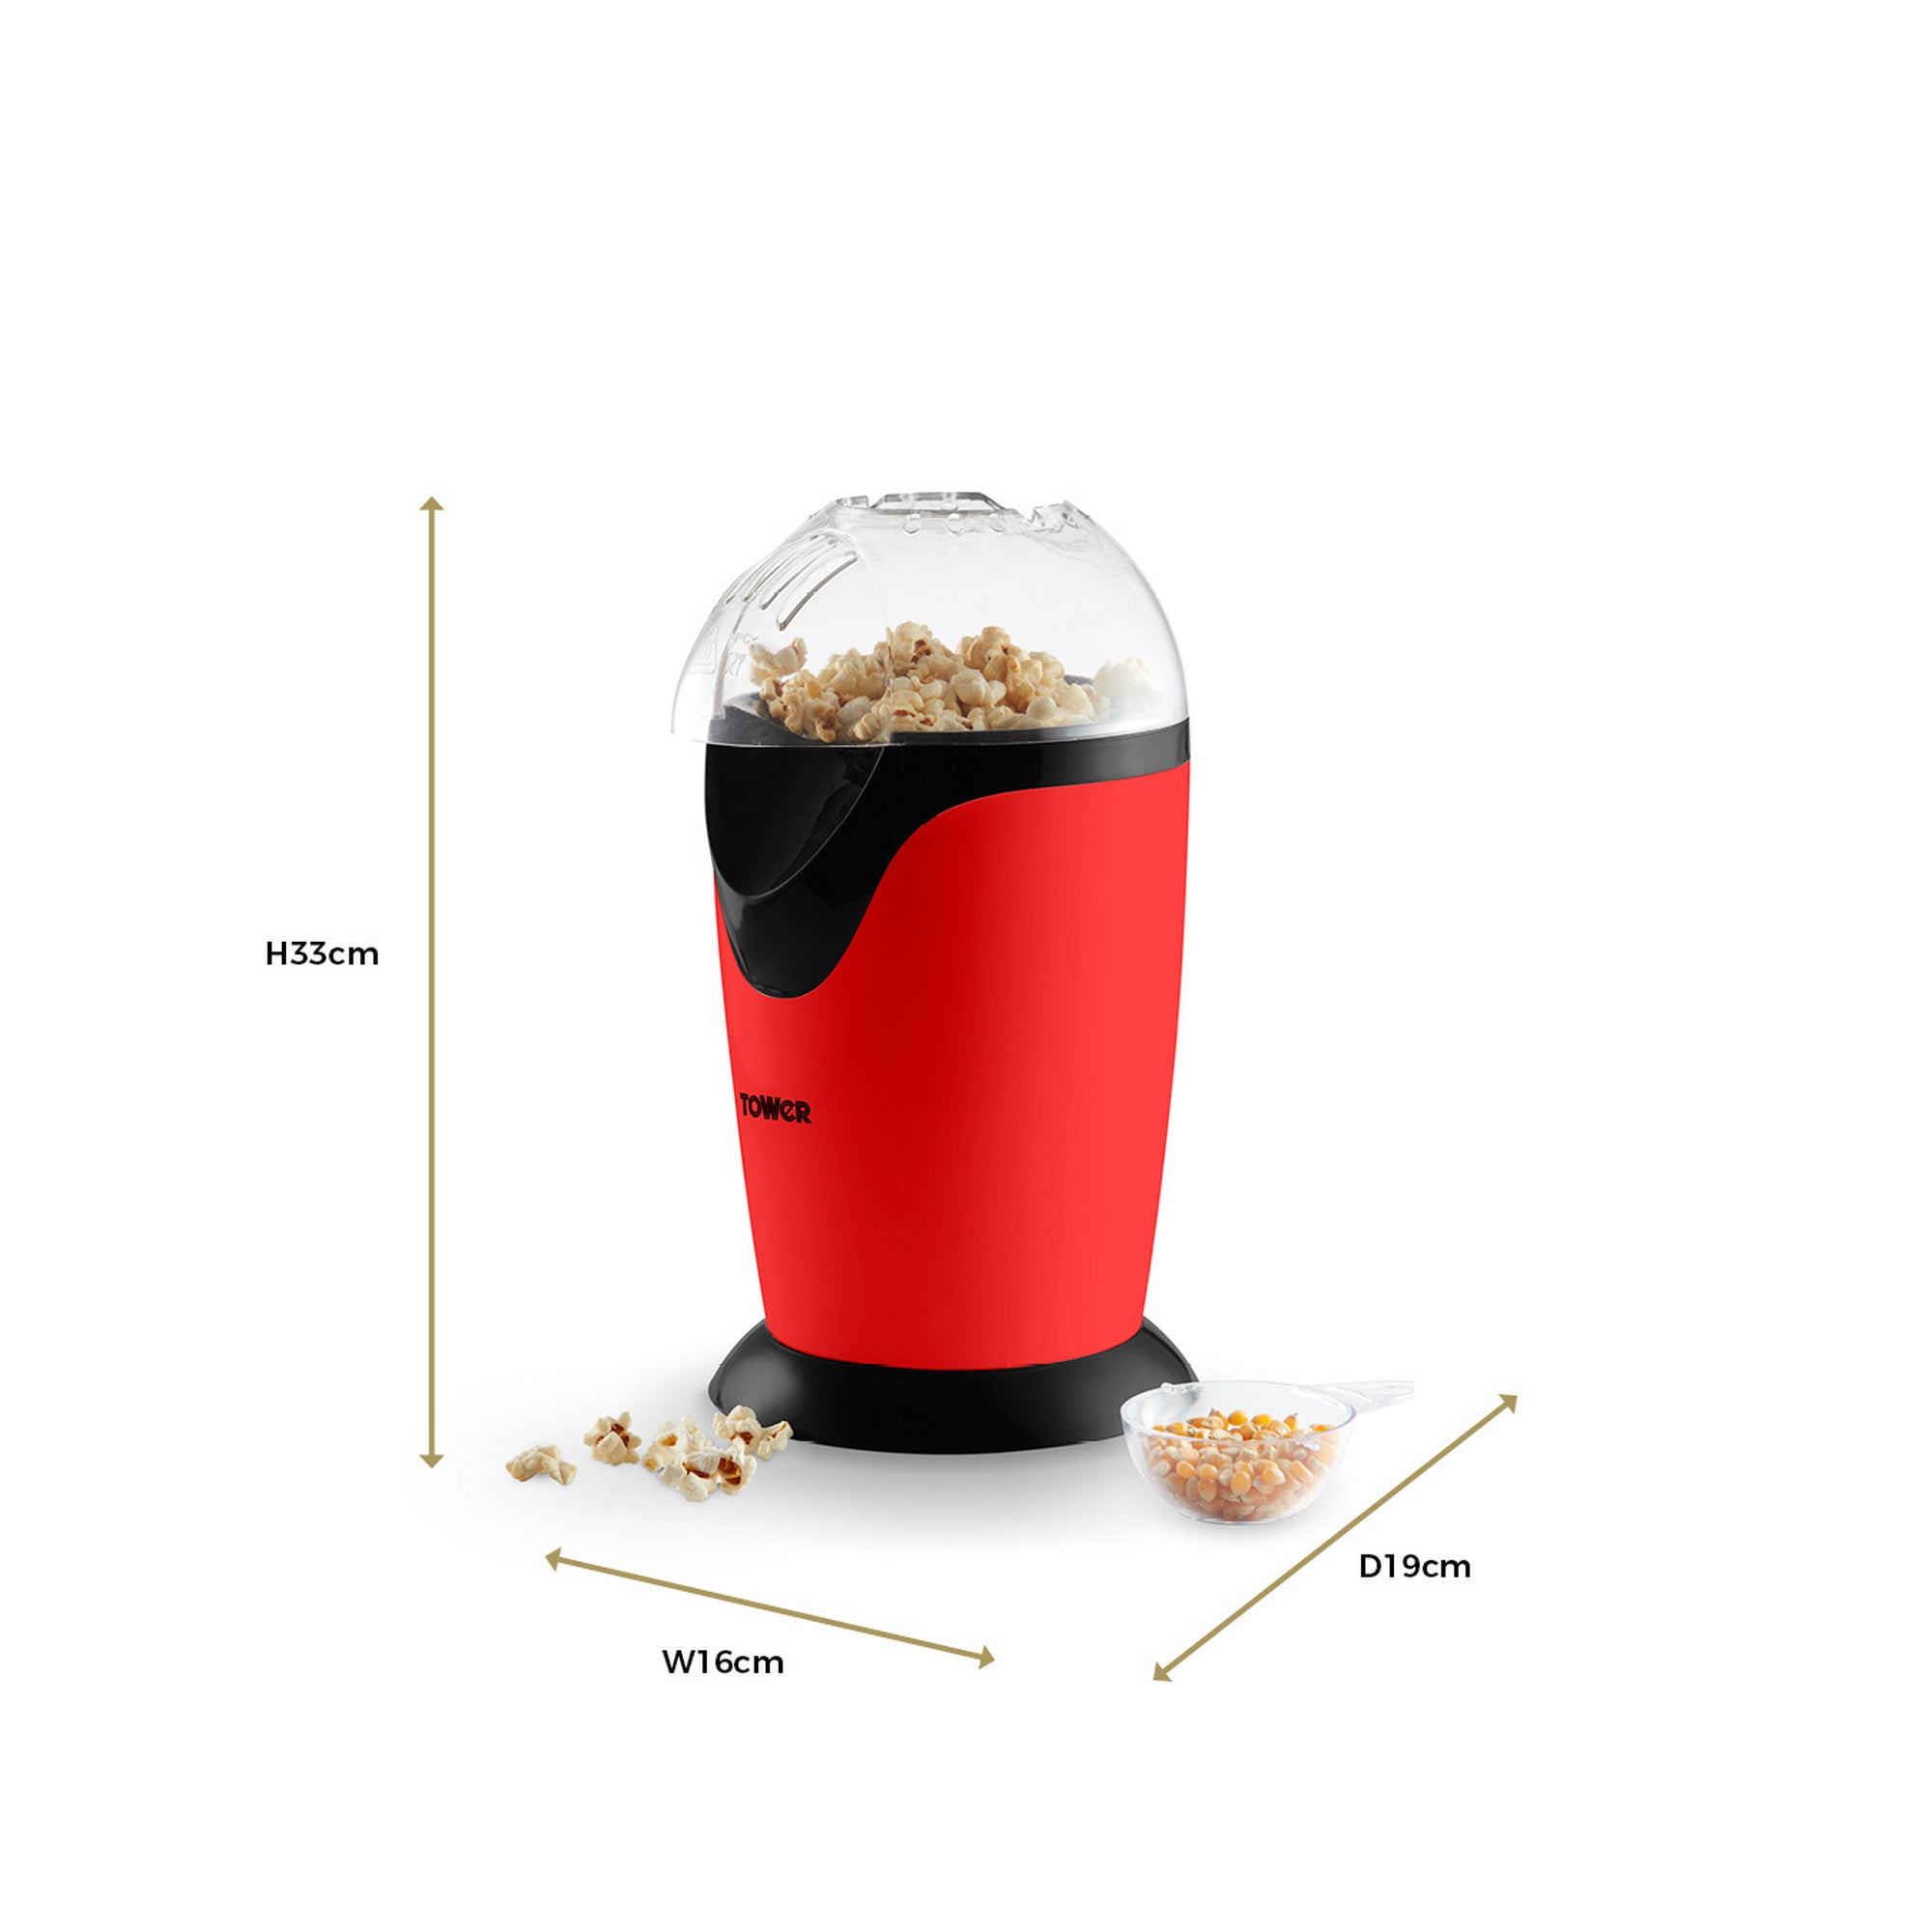 Tower 1200W Popcorn Maker Dimensions